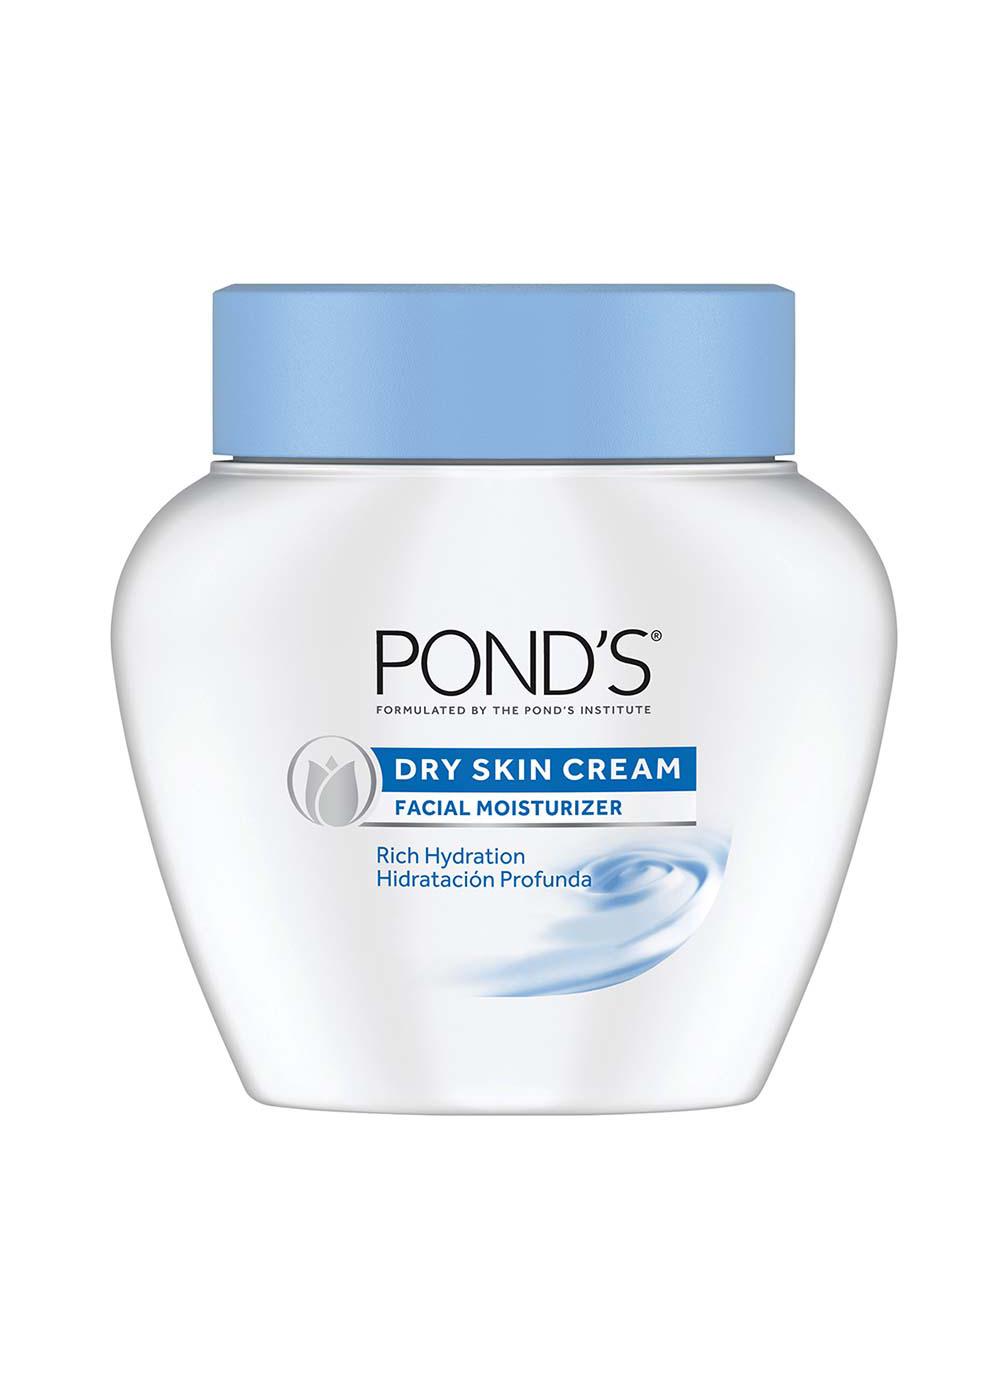 Pond's Dry Skin Cream; image 1 of 3